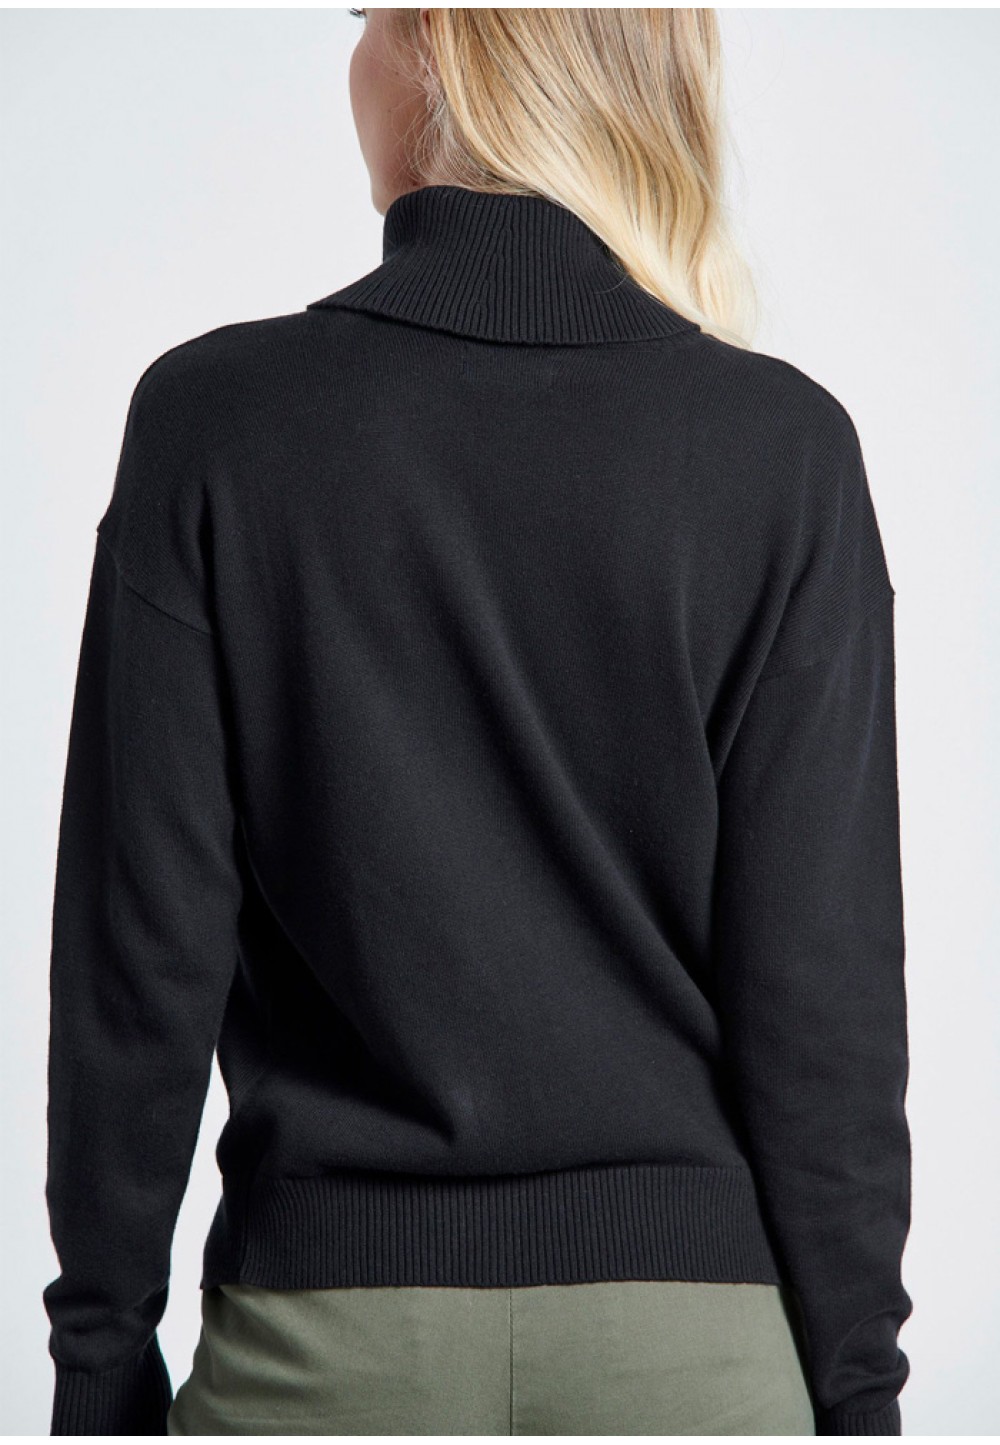 Жіночий чорний пуловер